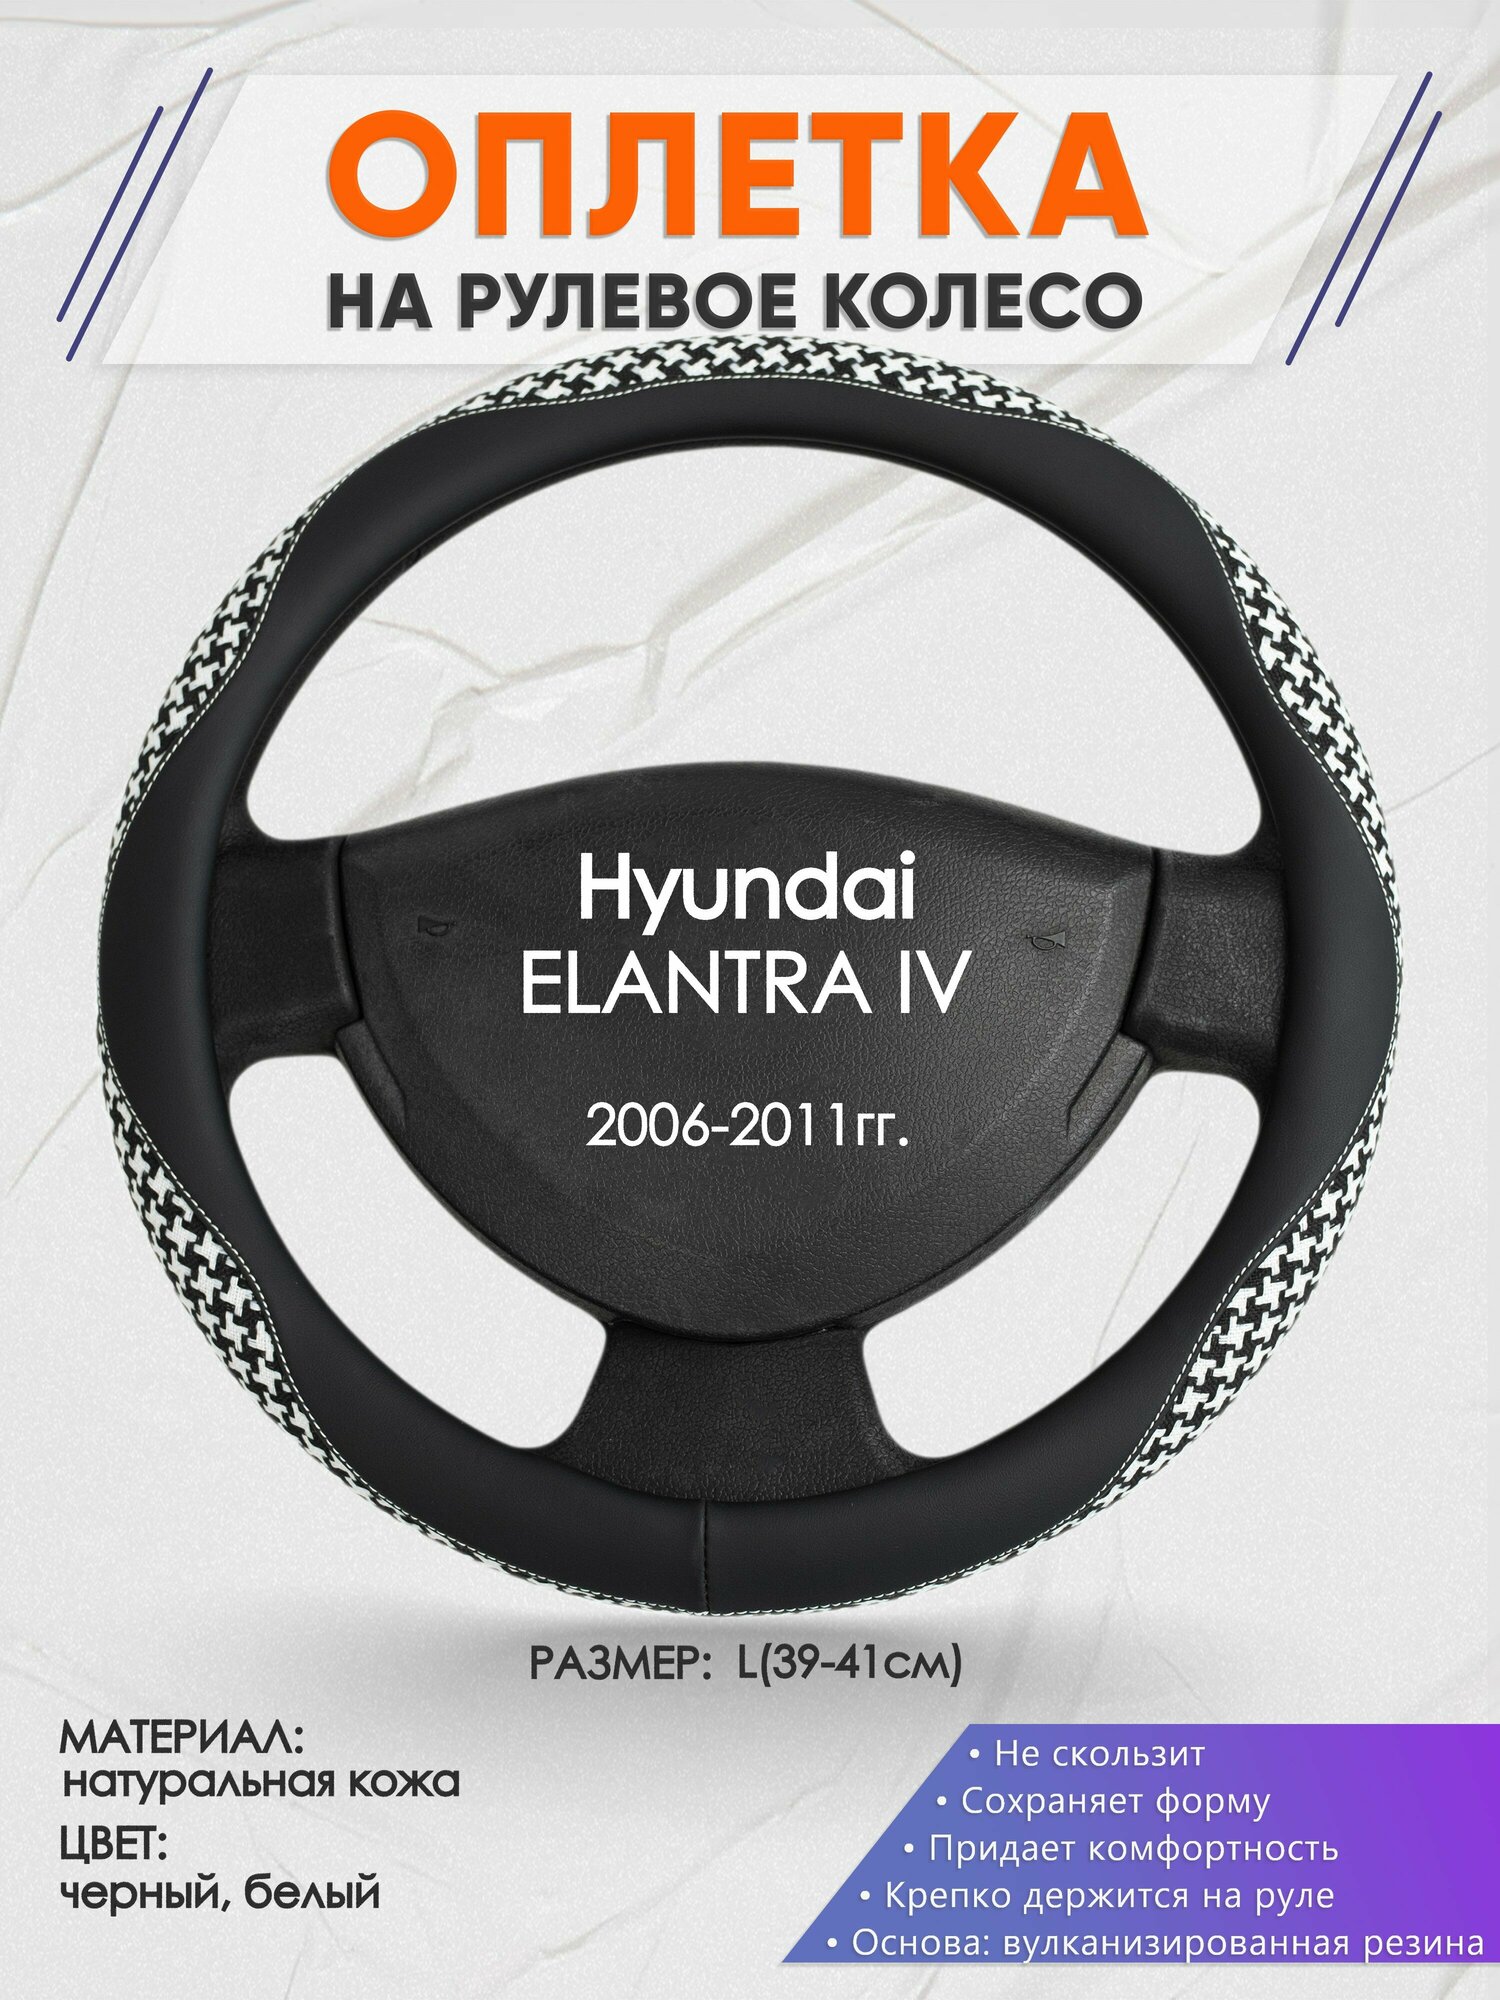 Оплетка на руль для Hyundai ELANTRA 4(Хендай Элантра 4) 2006-2011, L(39-41см), Натуральная кожа 21